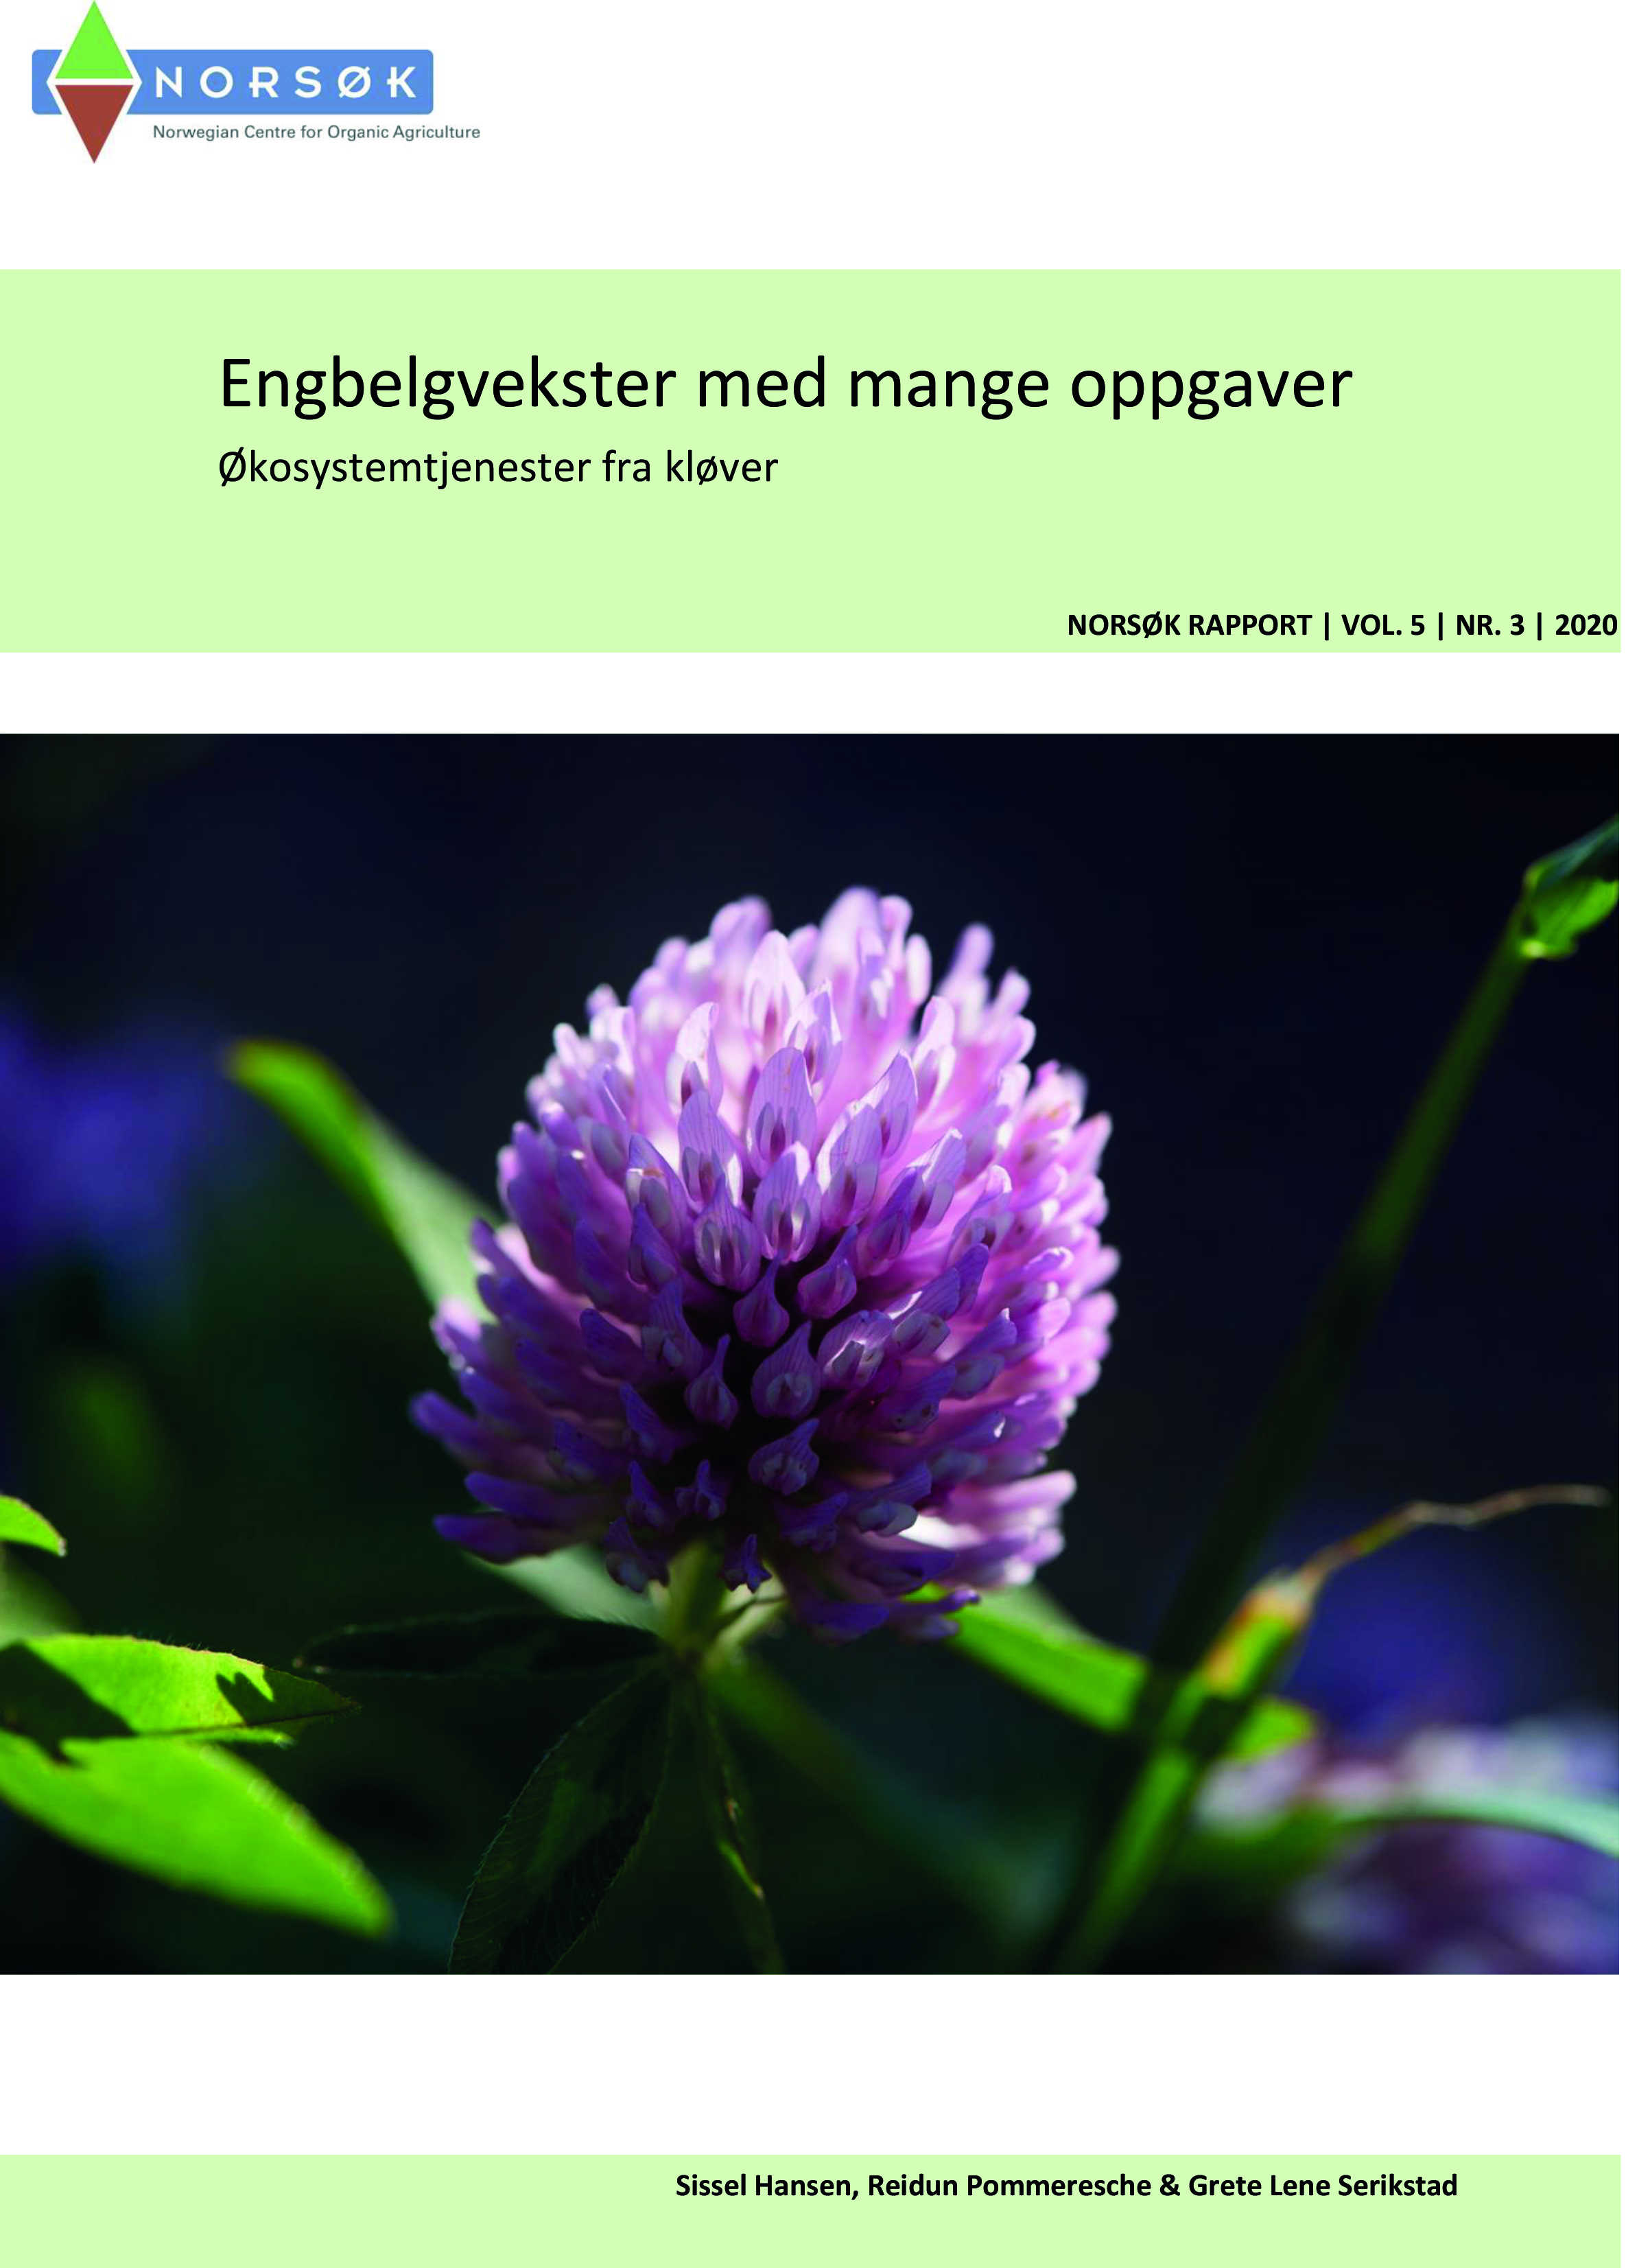 Norsø K Rapport Nr 3 2020 Engbelgvekster 1